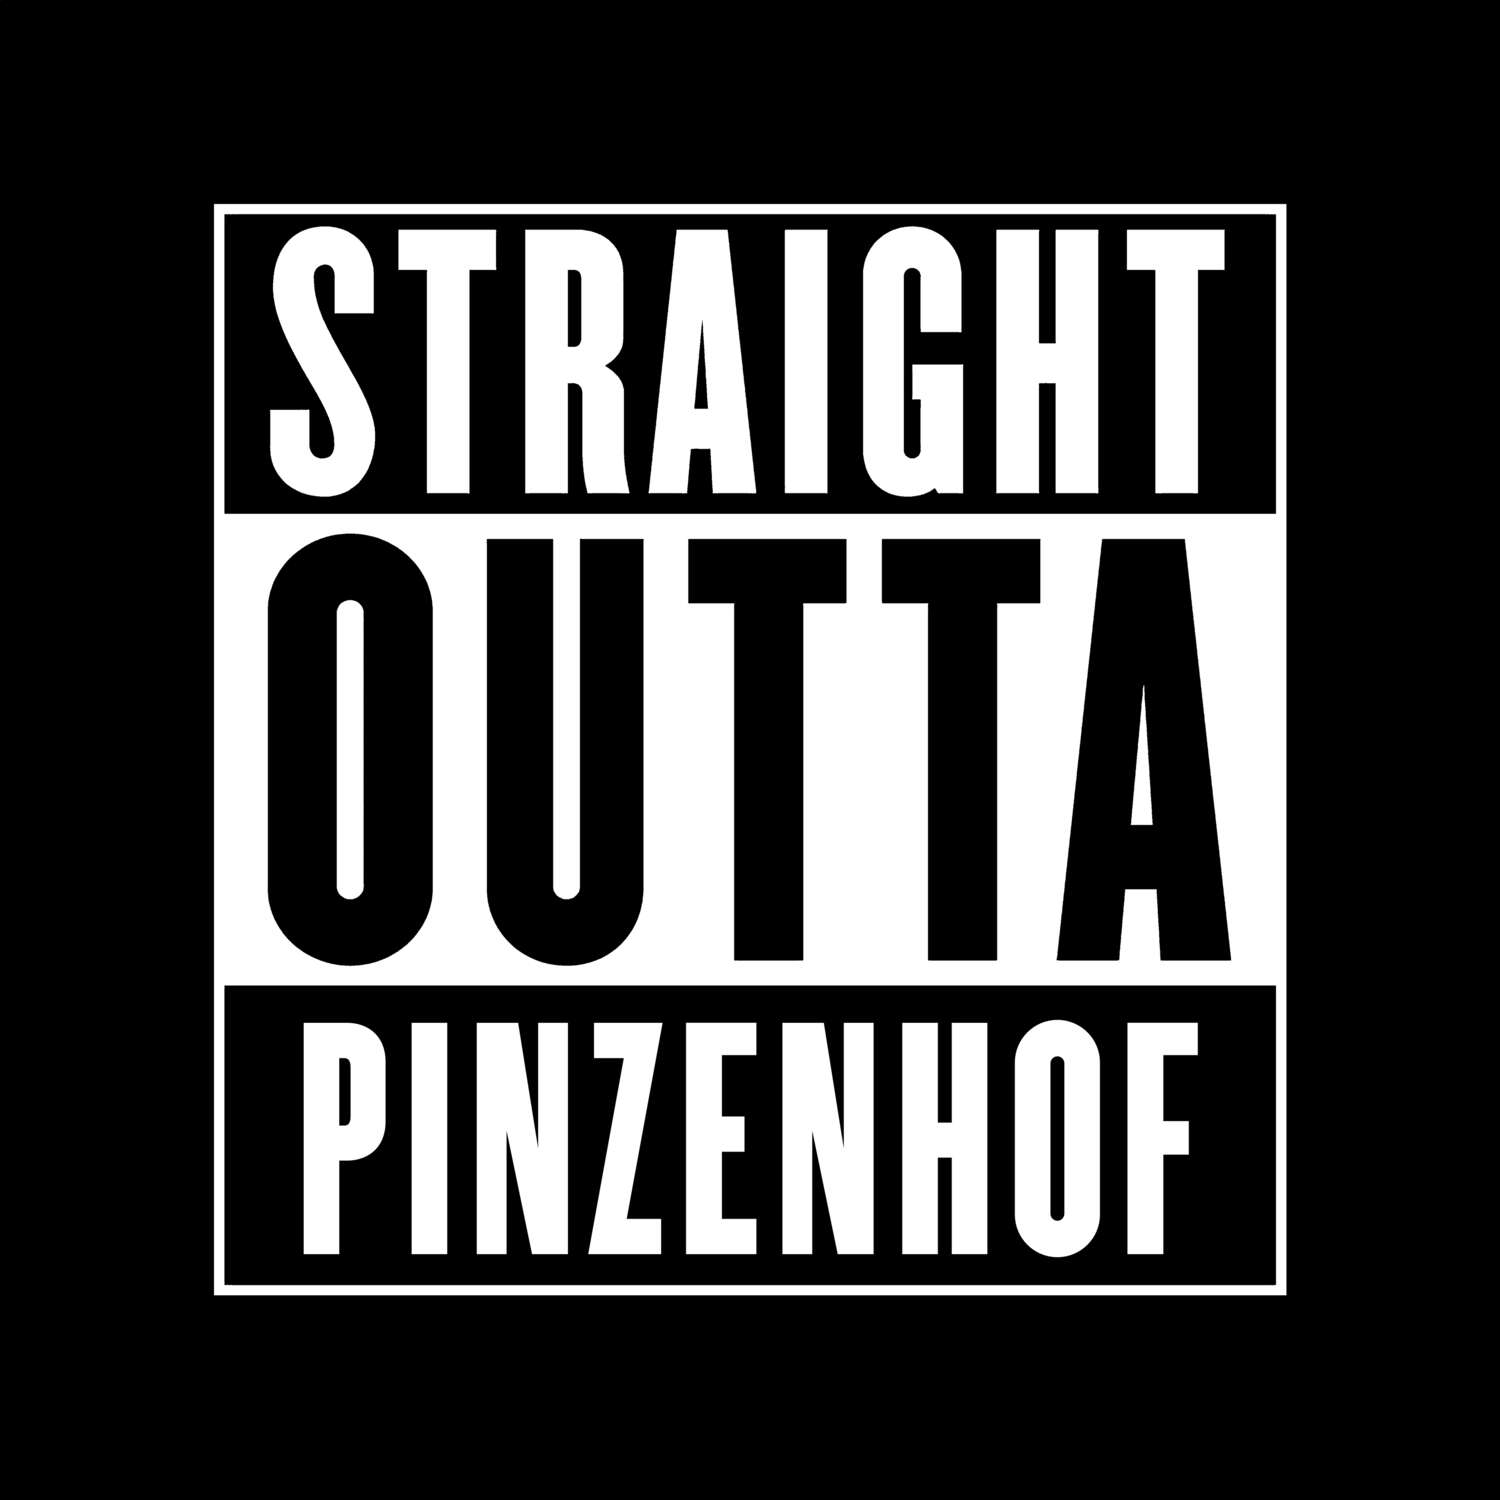 Pinzenhof T-Shirt »Straight Outta«